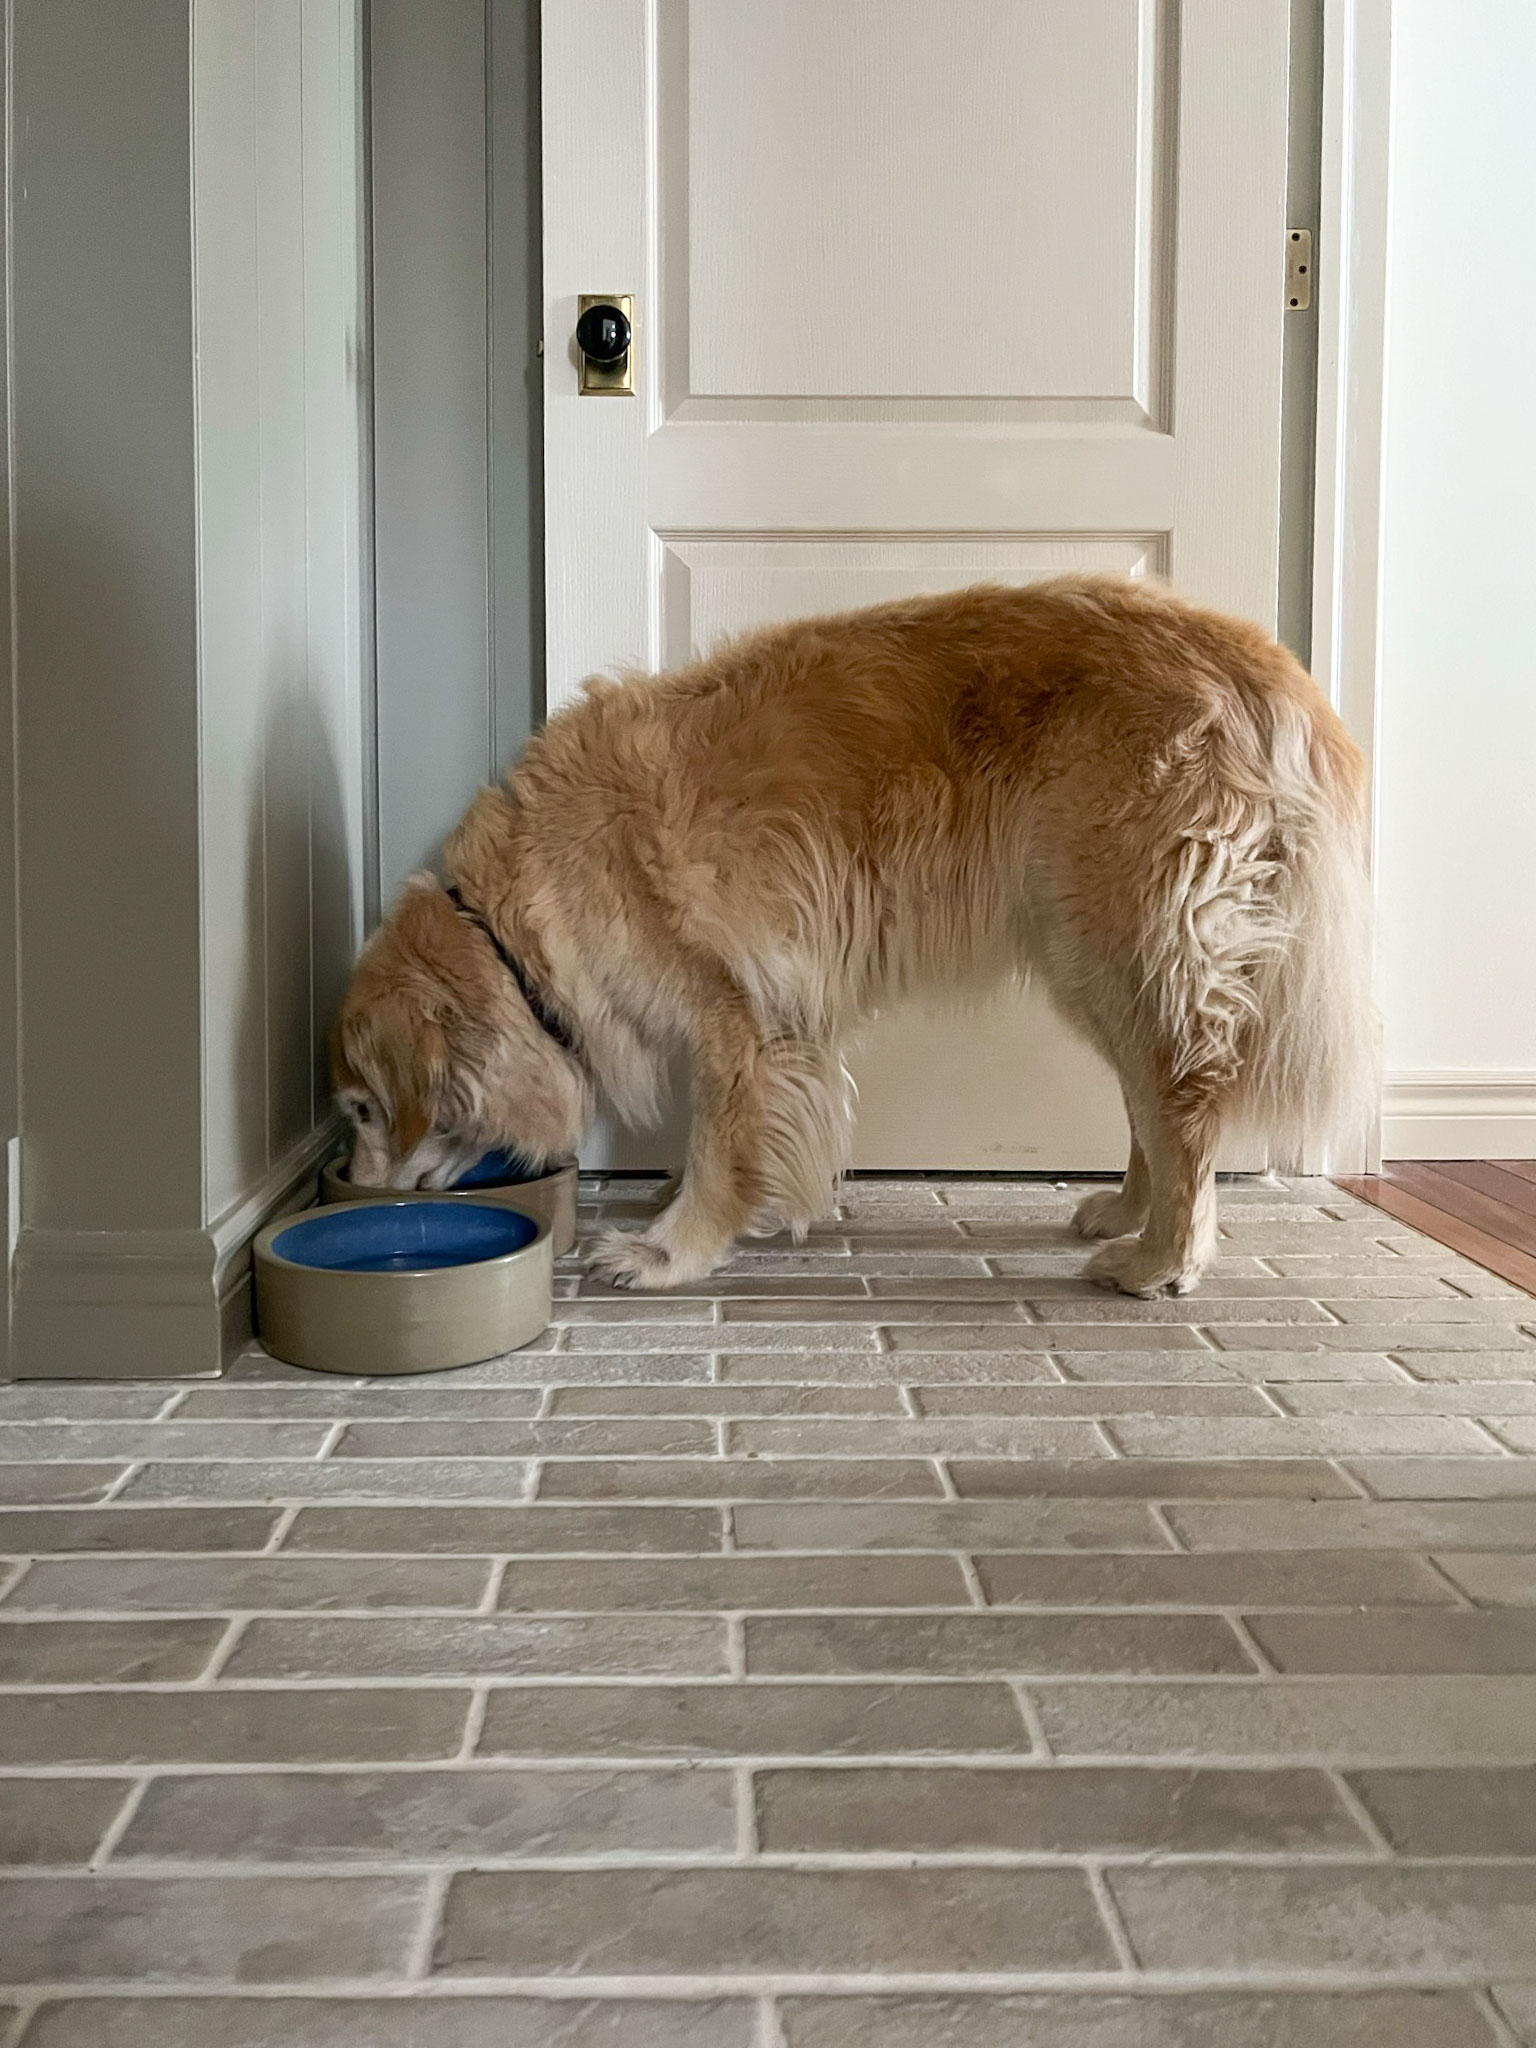 Dog eating out of ceramic bowls, beige brick tile floor and shiplap walls